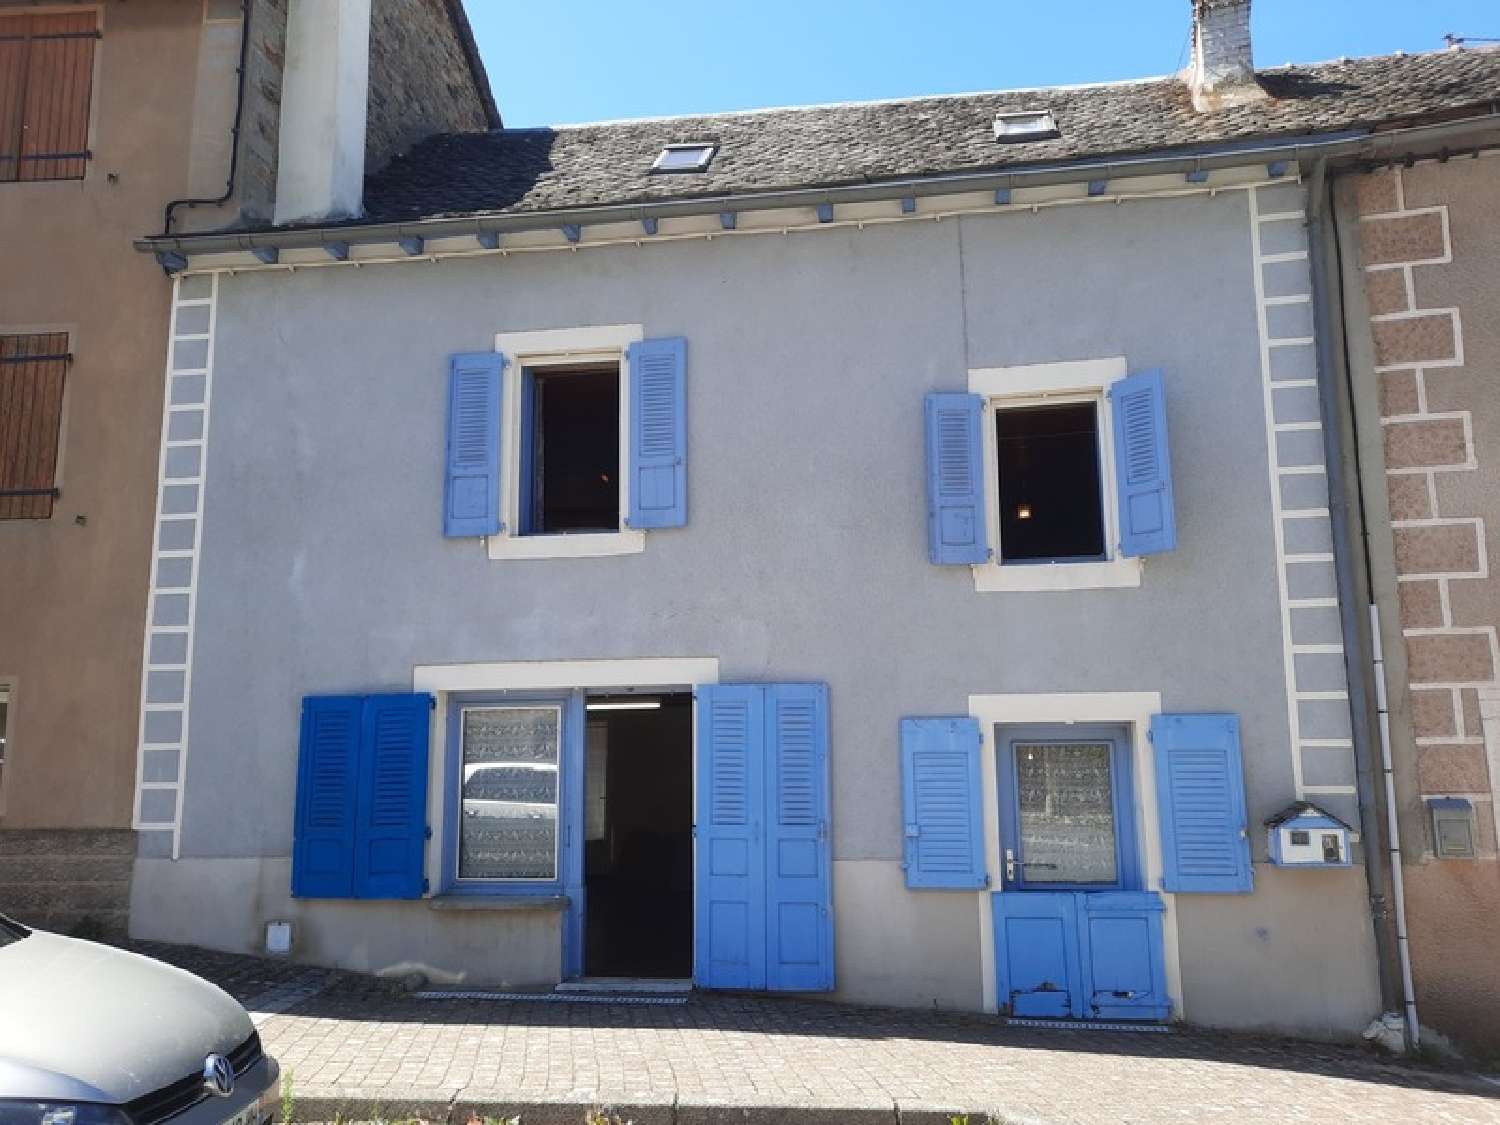  for sale village house Arvieu Aveyron 1